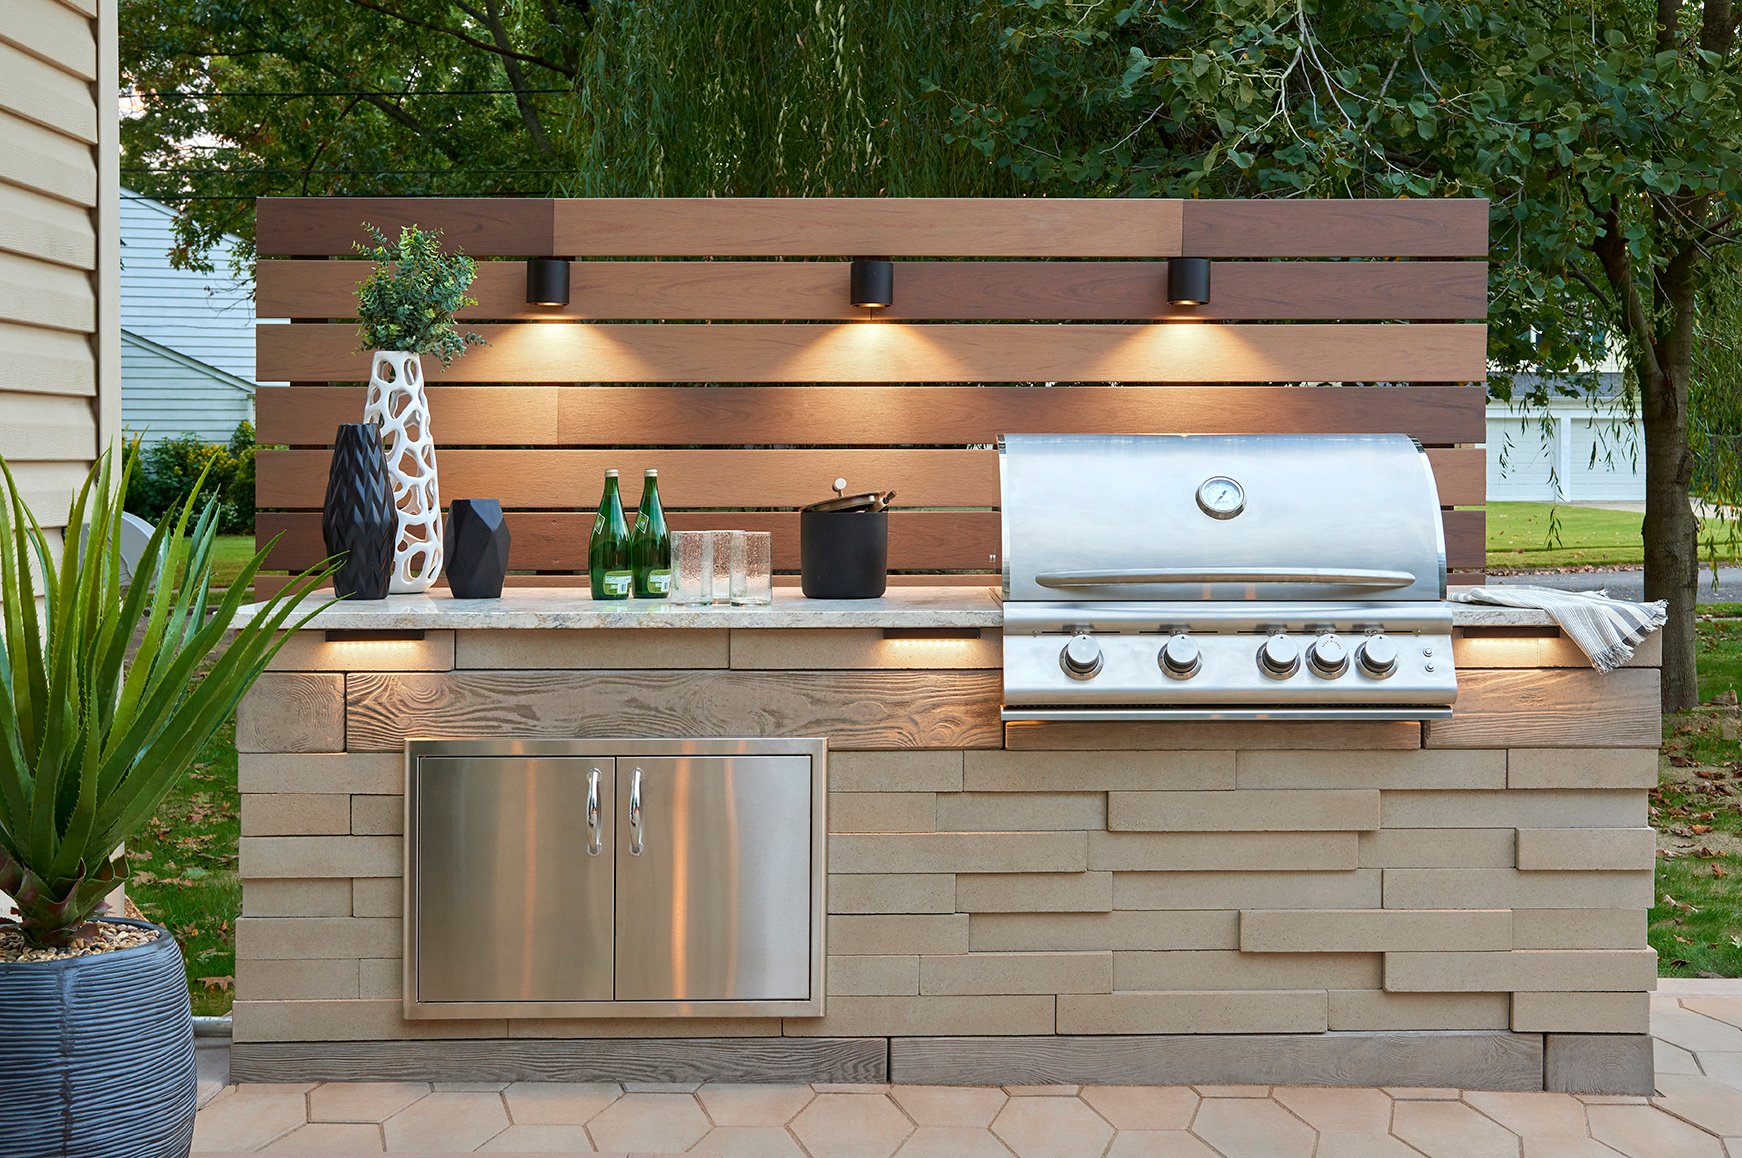 Outdoor Kitchen Countertops Hi Tech, How To Tile Outdoor Kitchen Countertop